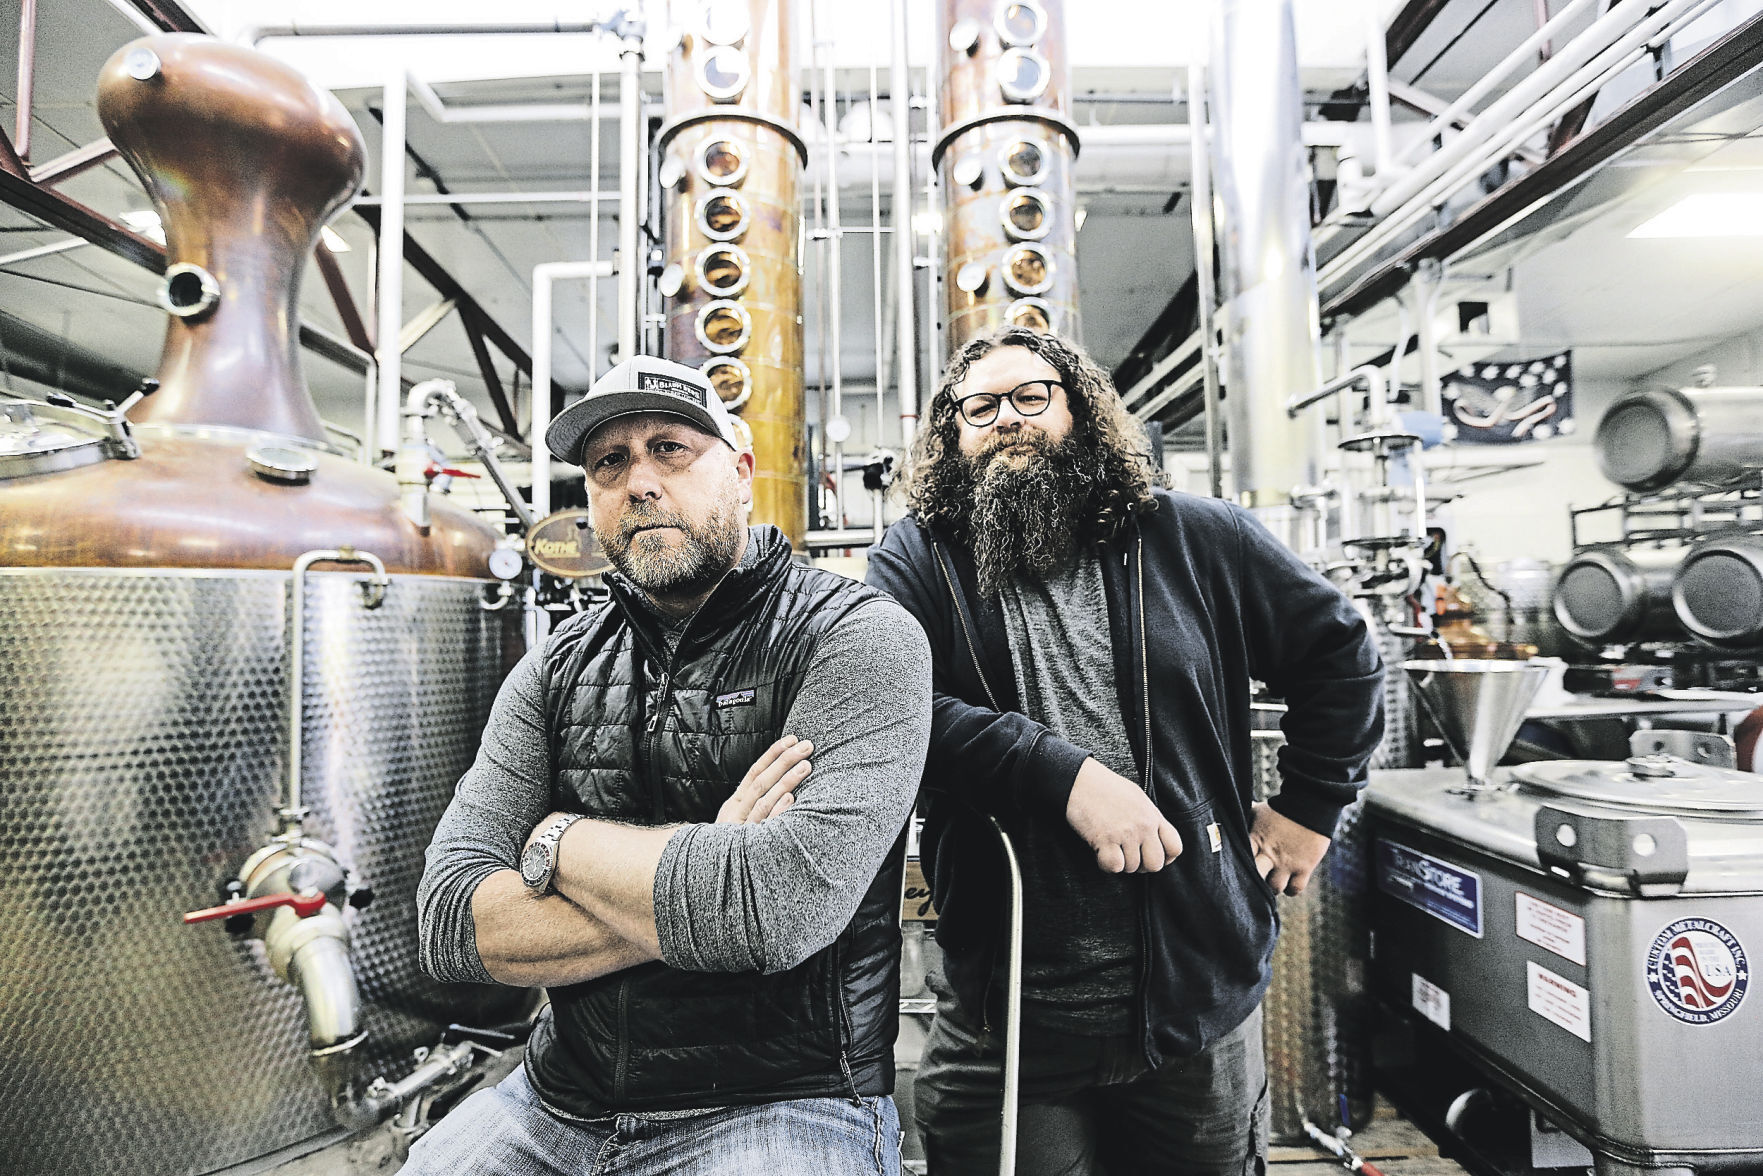 Matt (left) and Mike Blaum, of Blaum Bros. Distilling Co., in Galena, Ill..    PHOTO CREDIT: Dave Kettering